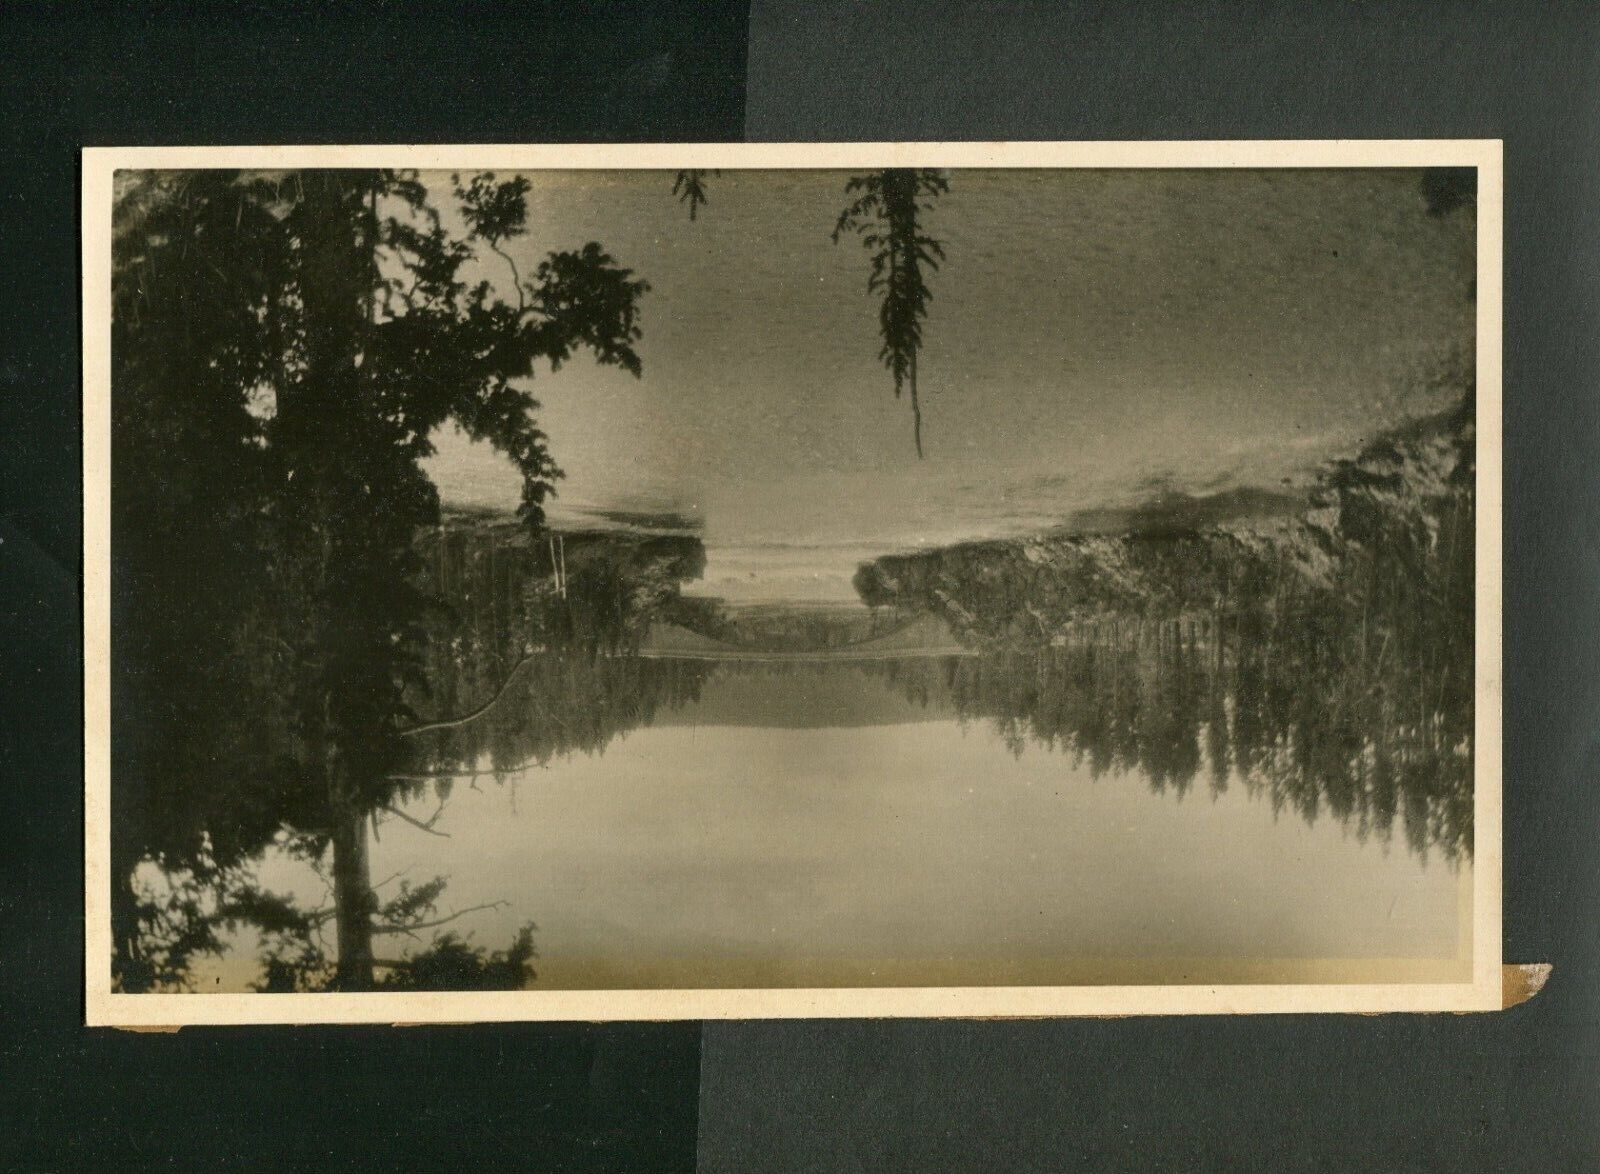 1923 ORIGINAL PHOTO CHITTENDEN  CO 10 X 6 TAKEN BY ALICE HAMER OR HAINES